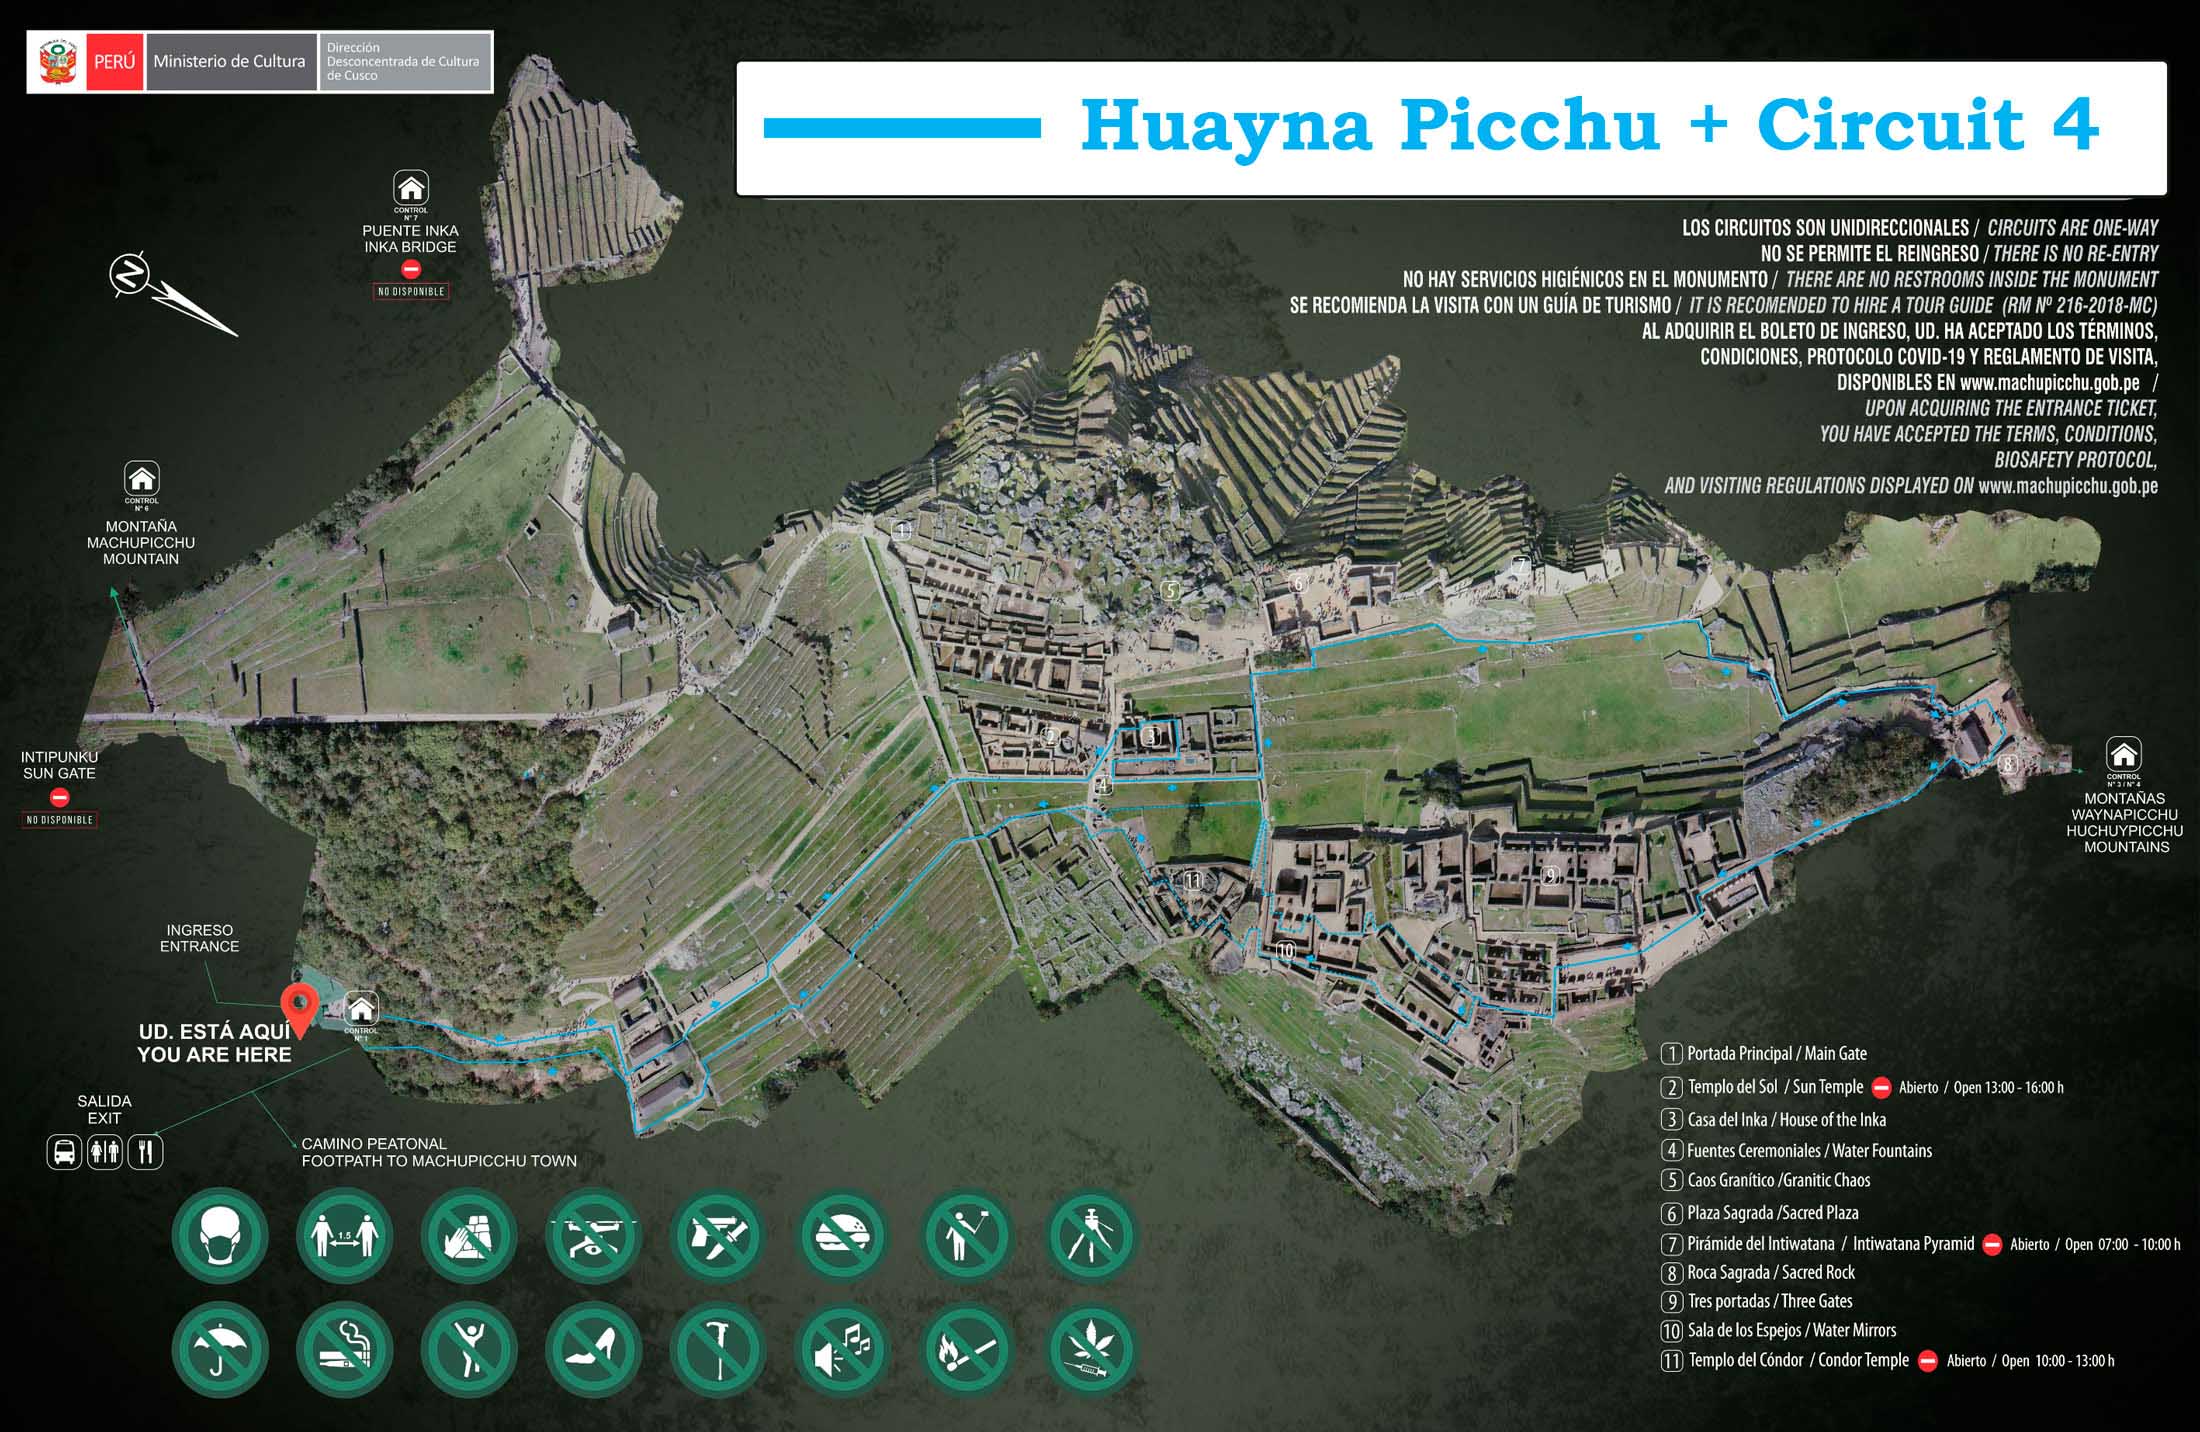 Huayna Picchu mountain + Circuit 4